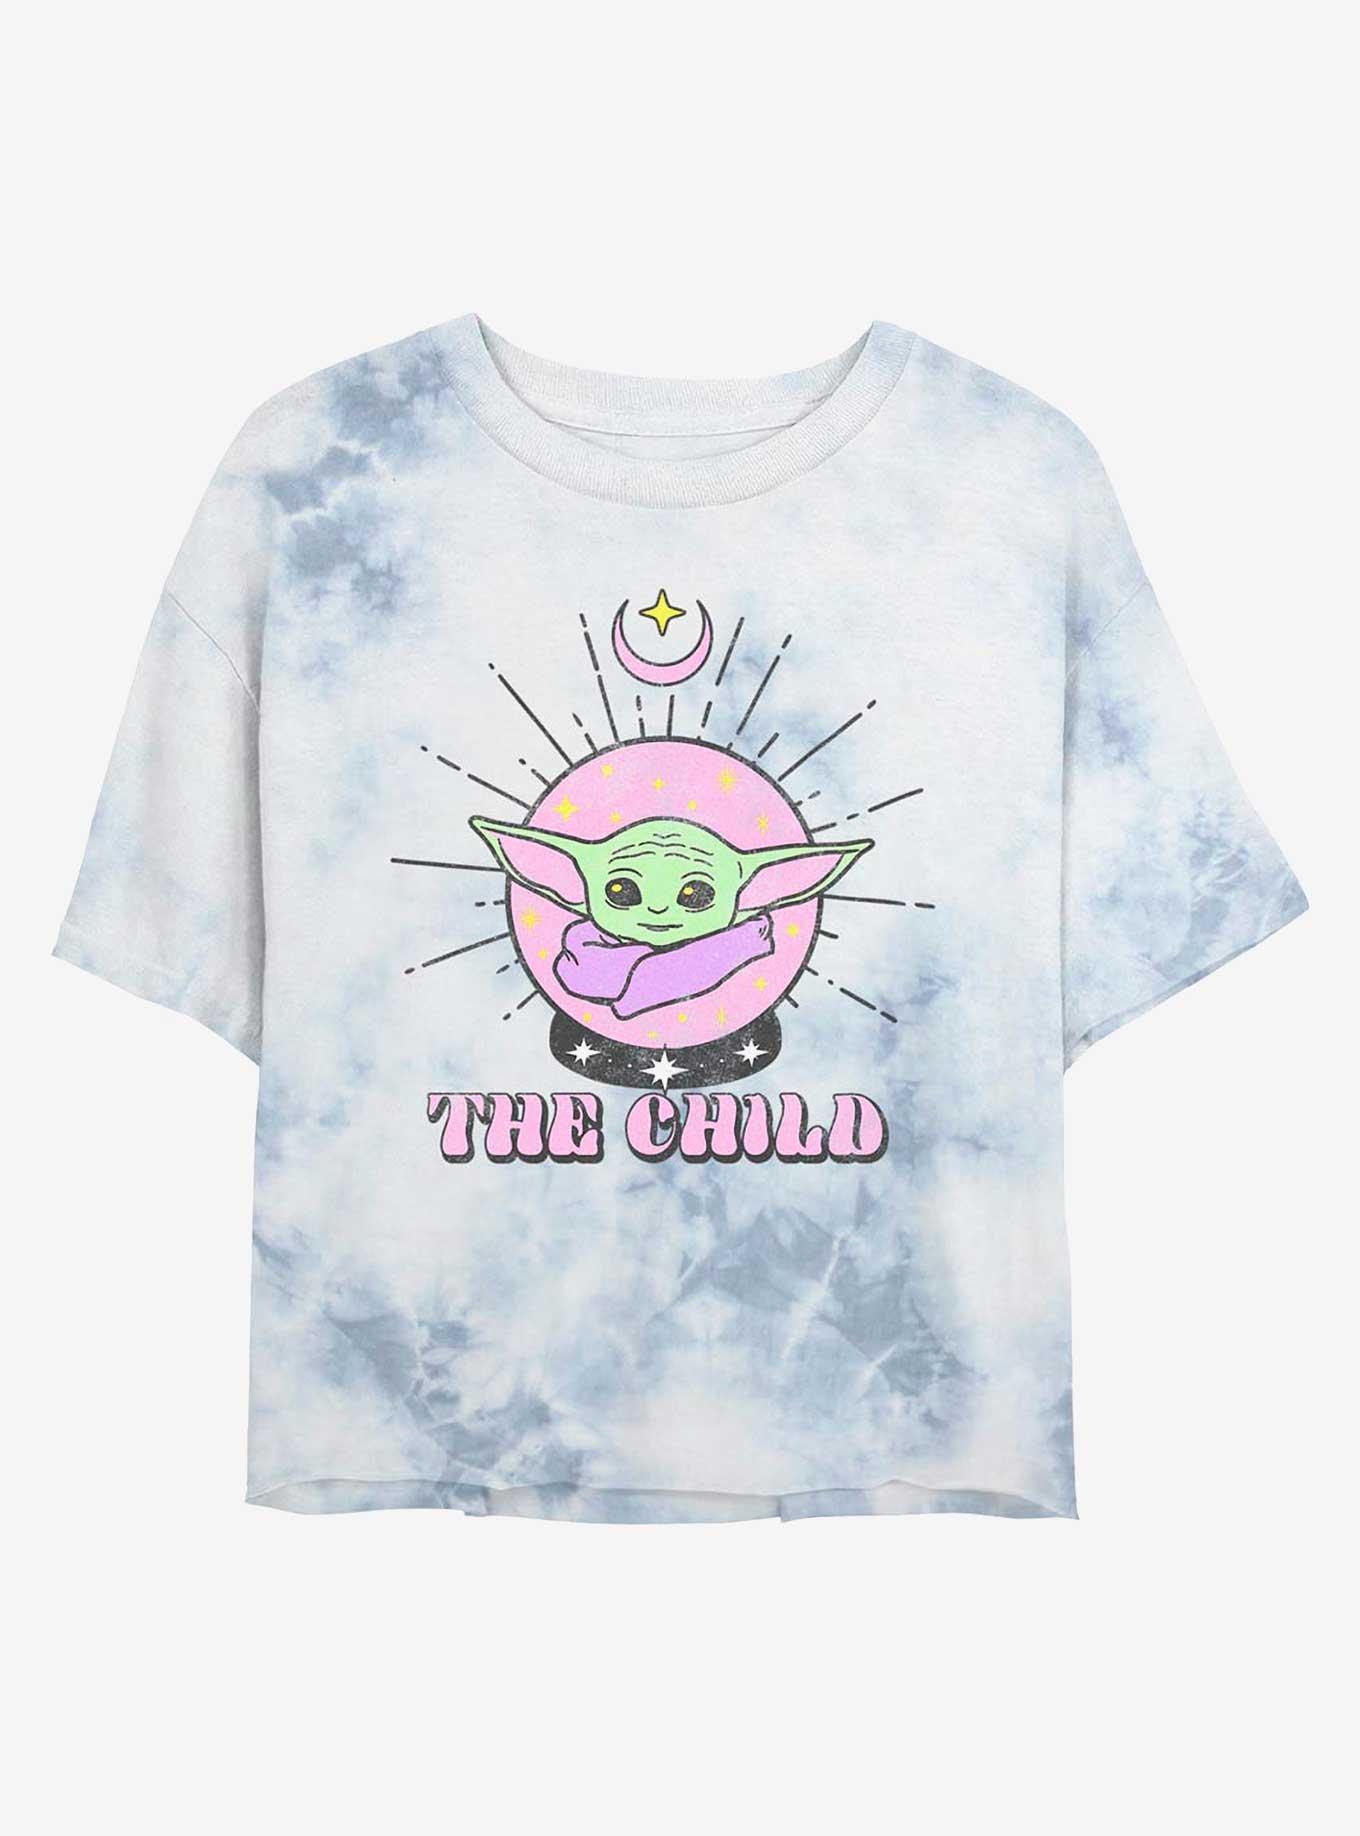 Star Wars The Mandalorian Child Orb Tie-Dye Girls Crop T-Shirt